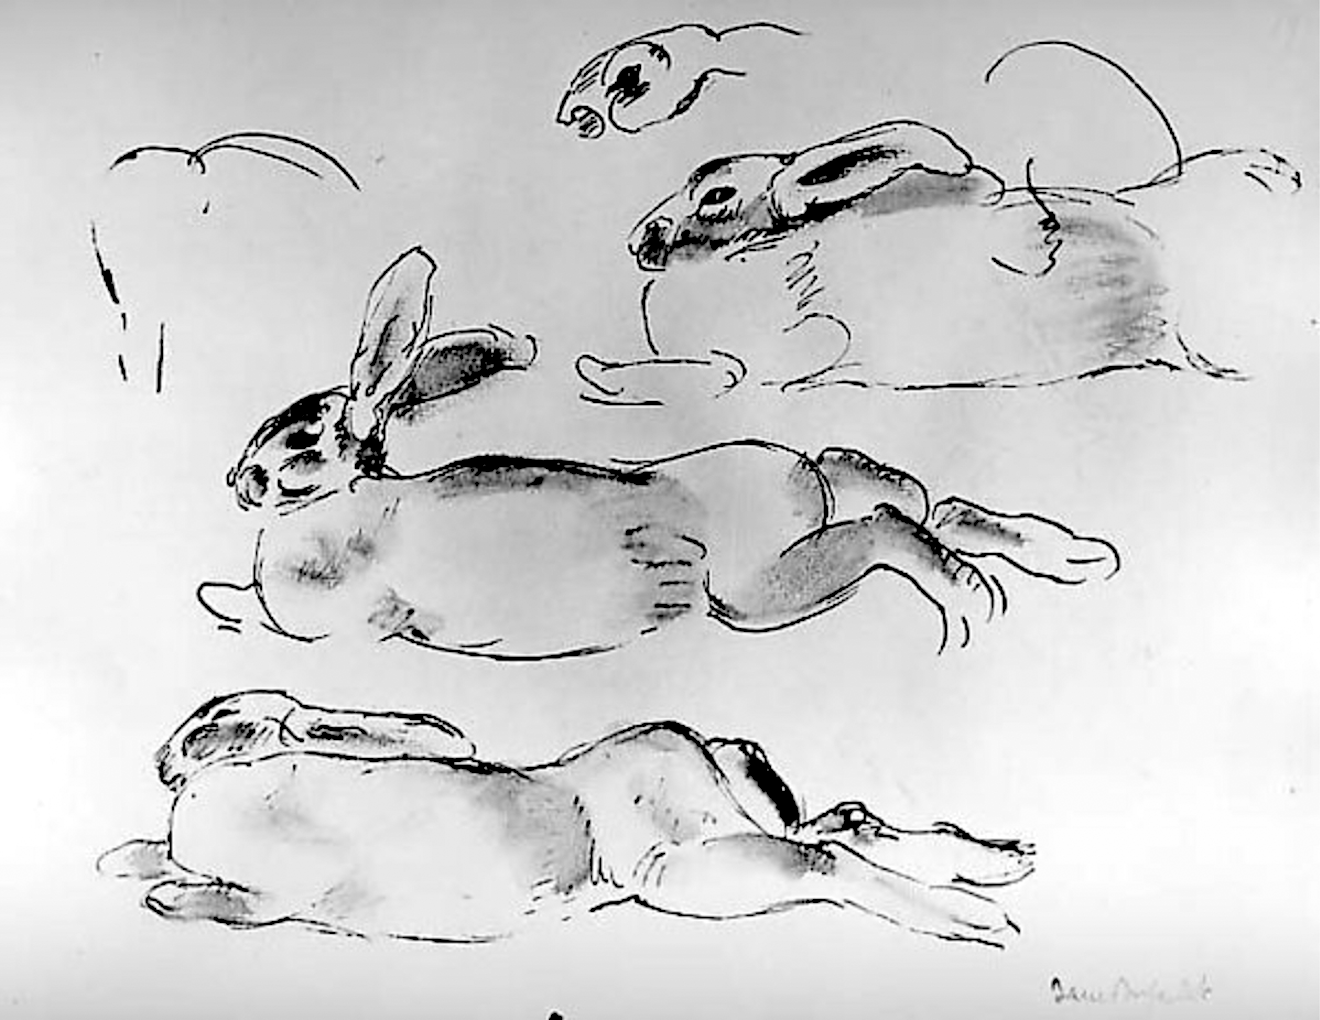 Jane Poupelet, studies of rabbits, Ink, wash and graphite on paper, ca. 1925. Metropolitan Museum of Art